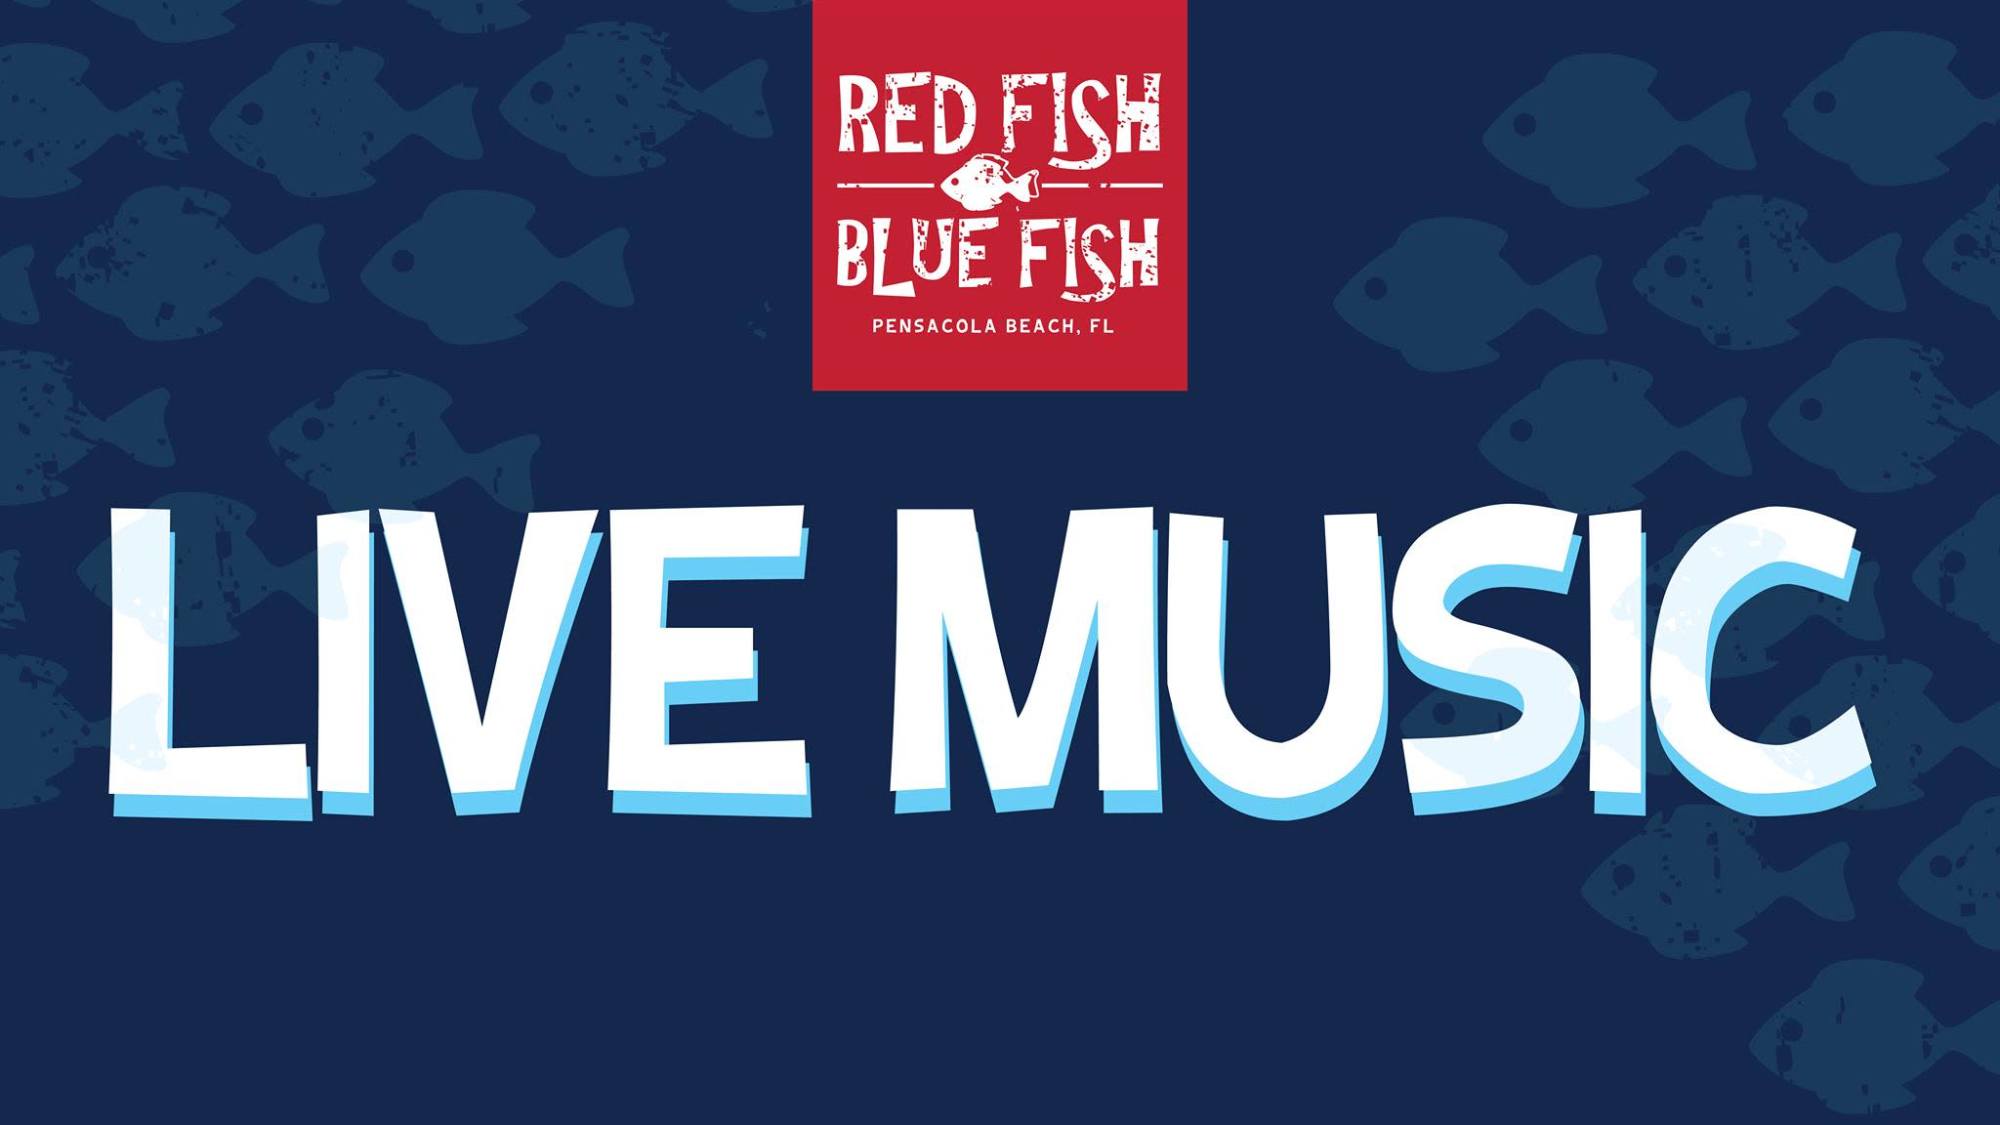 Red Fish Blue Fish, Pensacola Beach FL